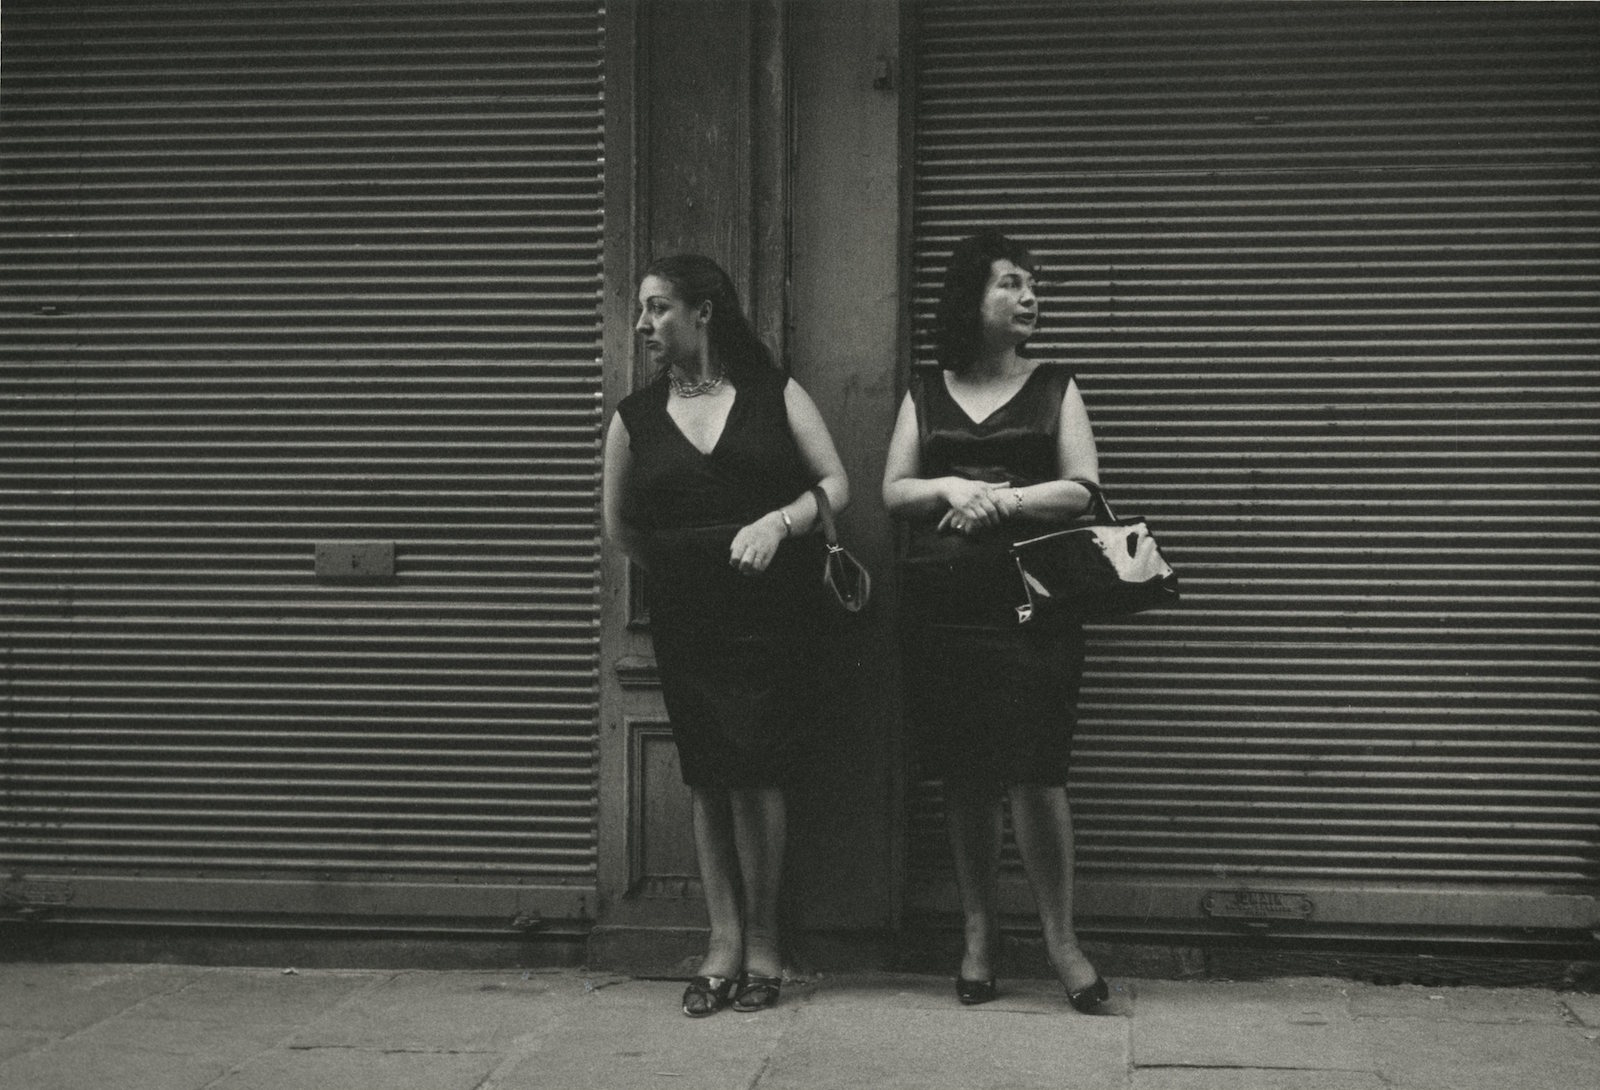 Two Women, Prostitution Series, Rue Saint Denis, Paris, 1960